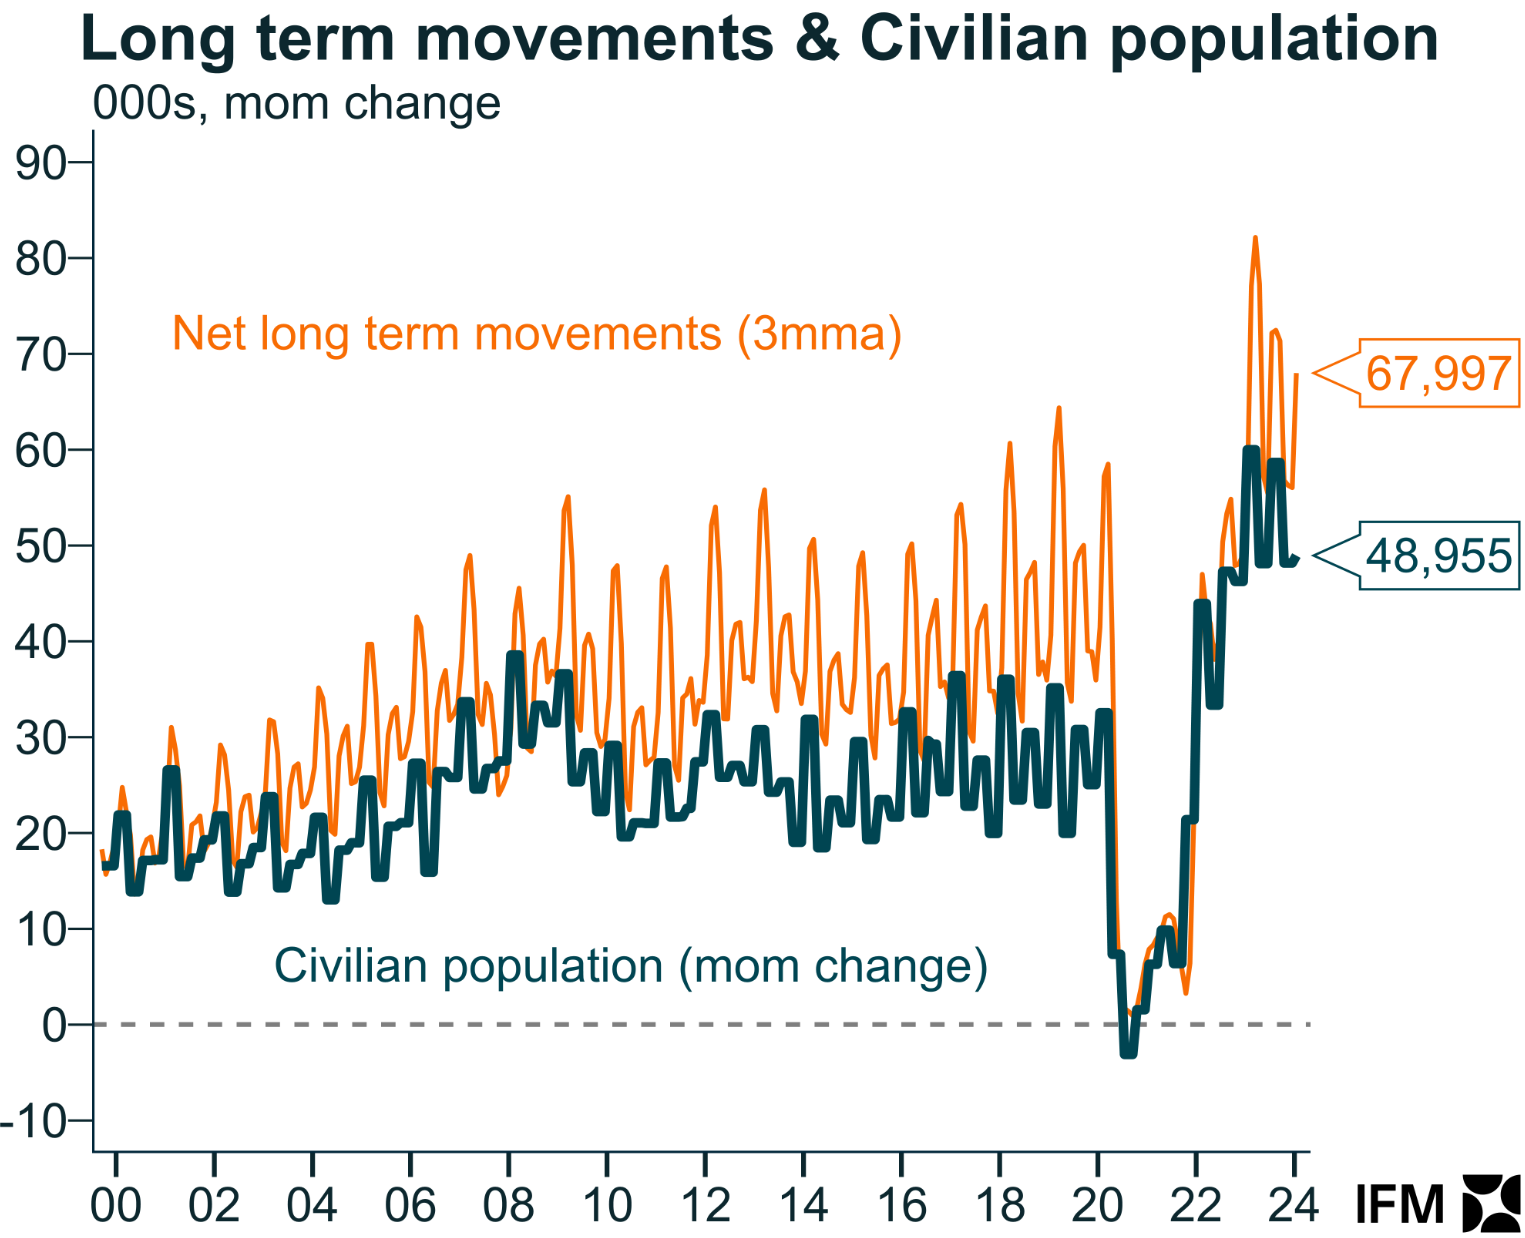 Long-term movements in civilian population